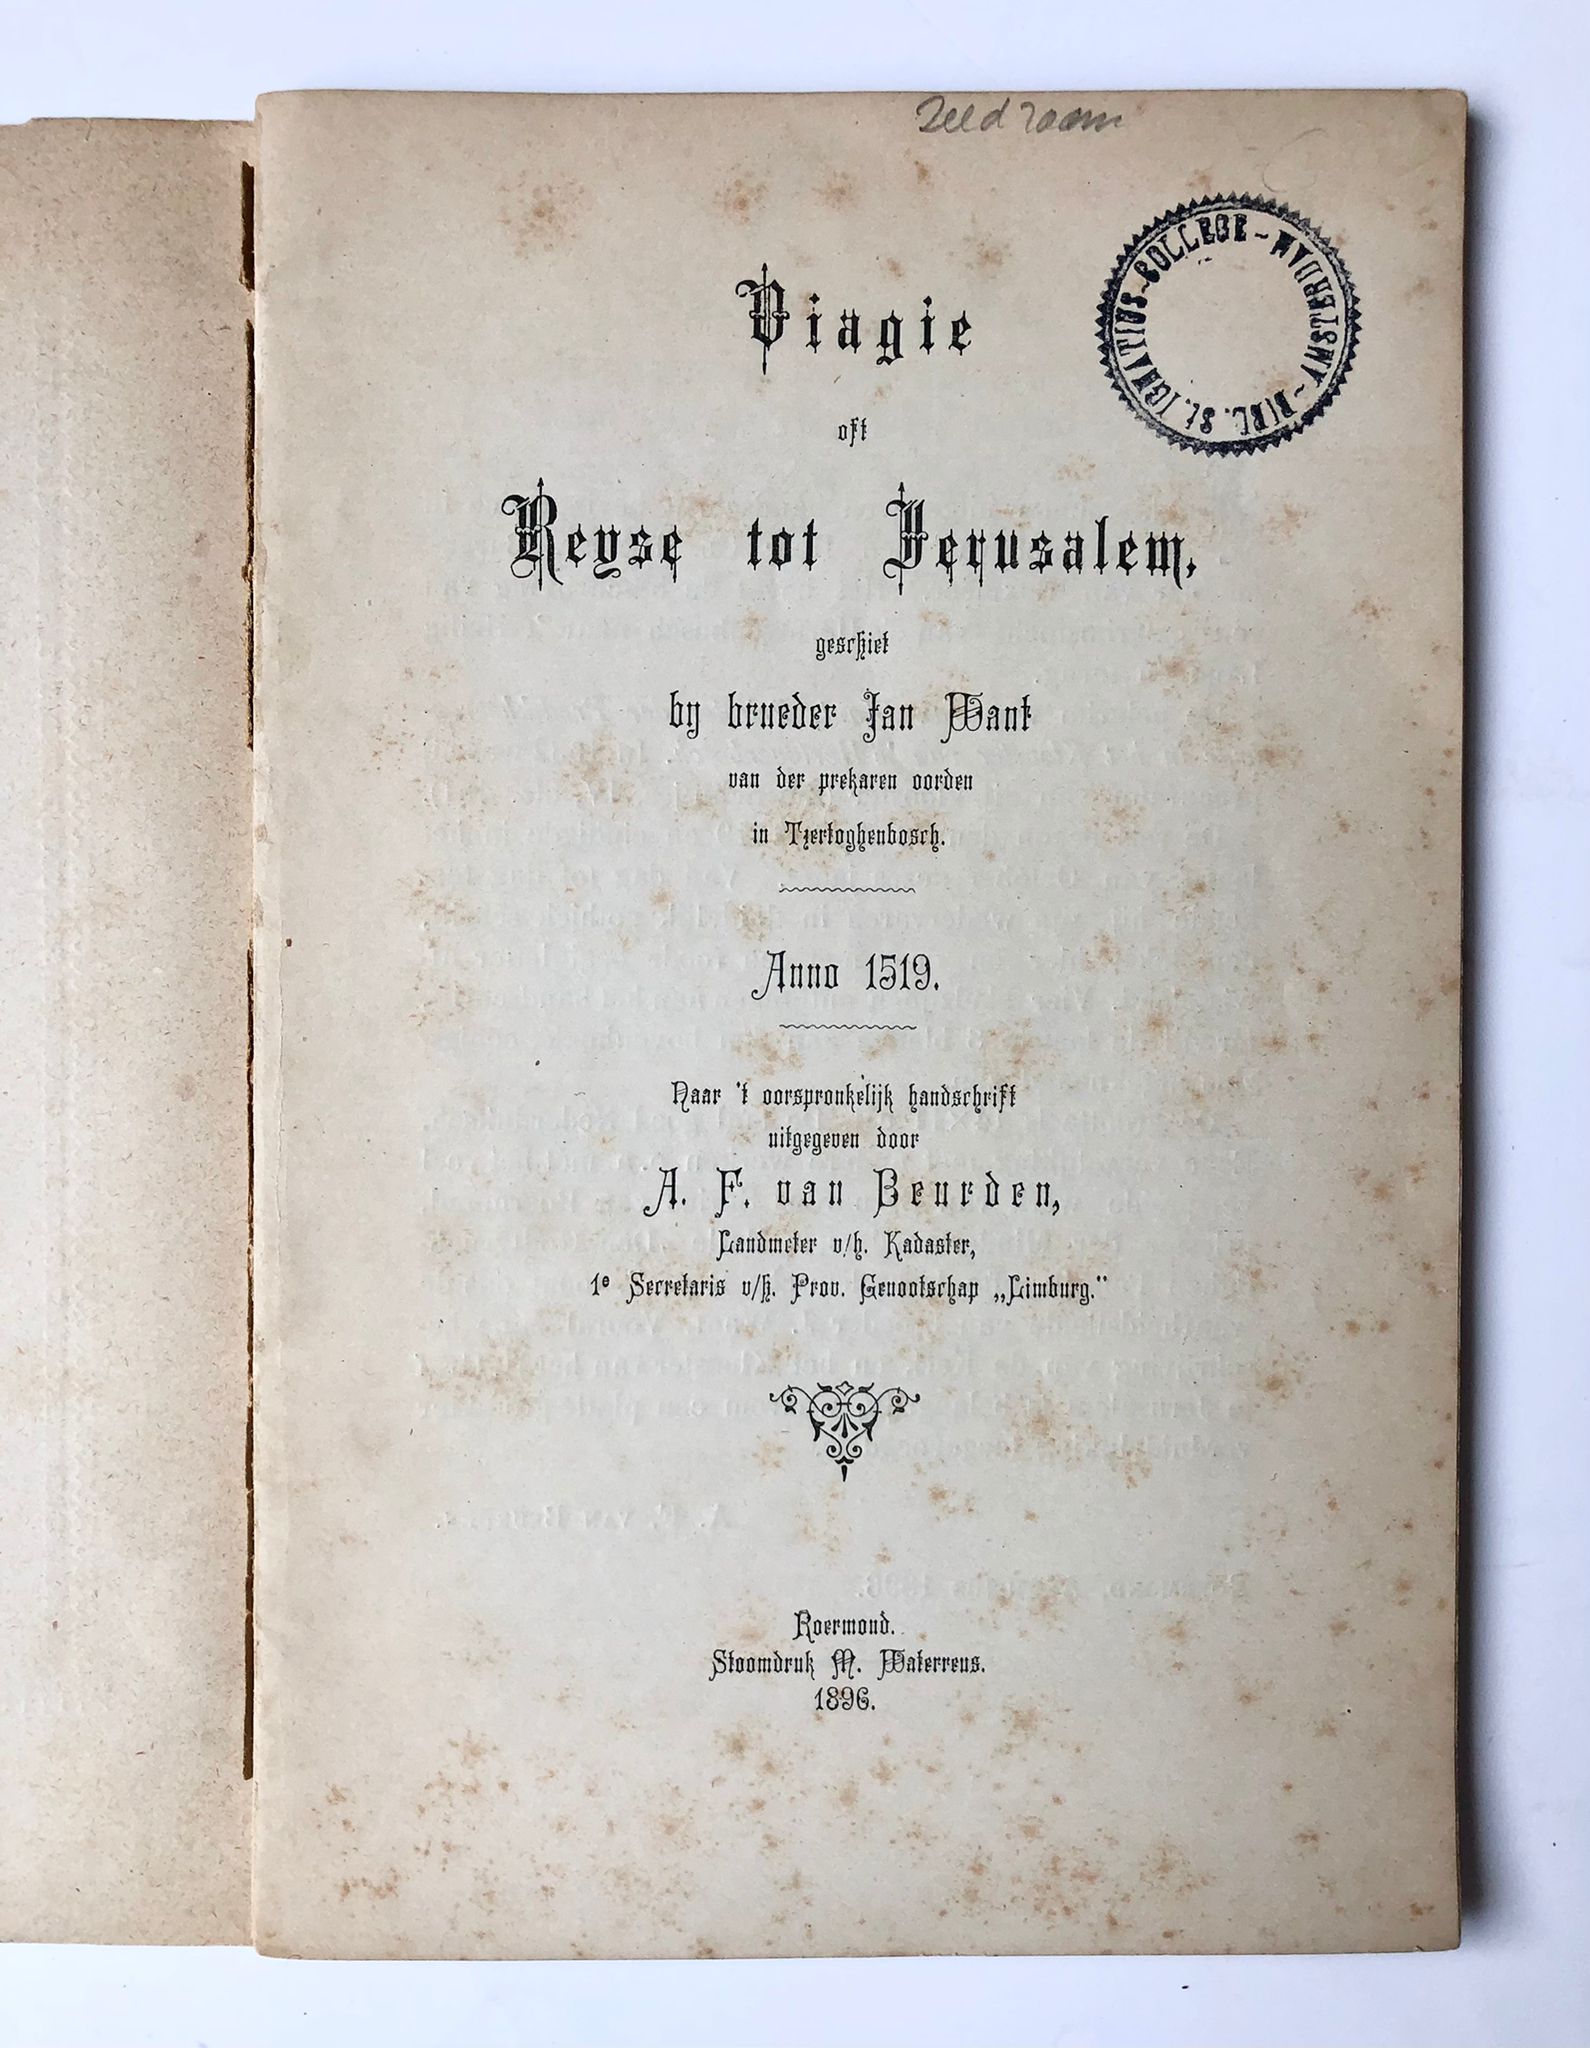 [Middle-East, Jerusalem, 1896] Diagie oft Reuse tot Jerusalem geschiedt by brüder Jan Want, Anno 1519, Stoomdruk M. Waterreus, Roermond, 1896, 72 pp.